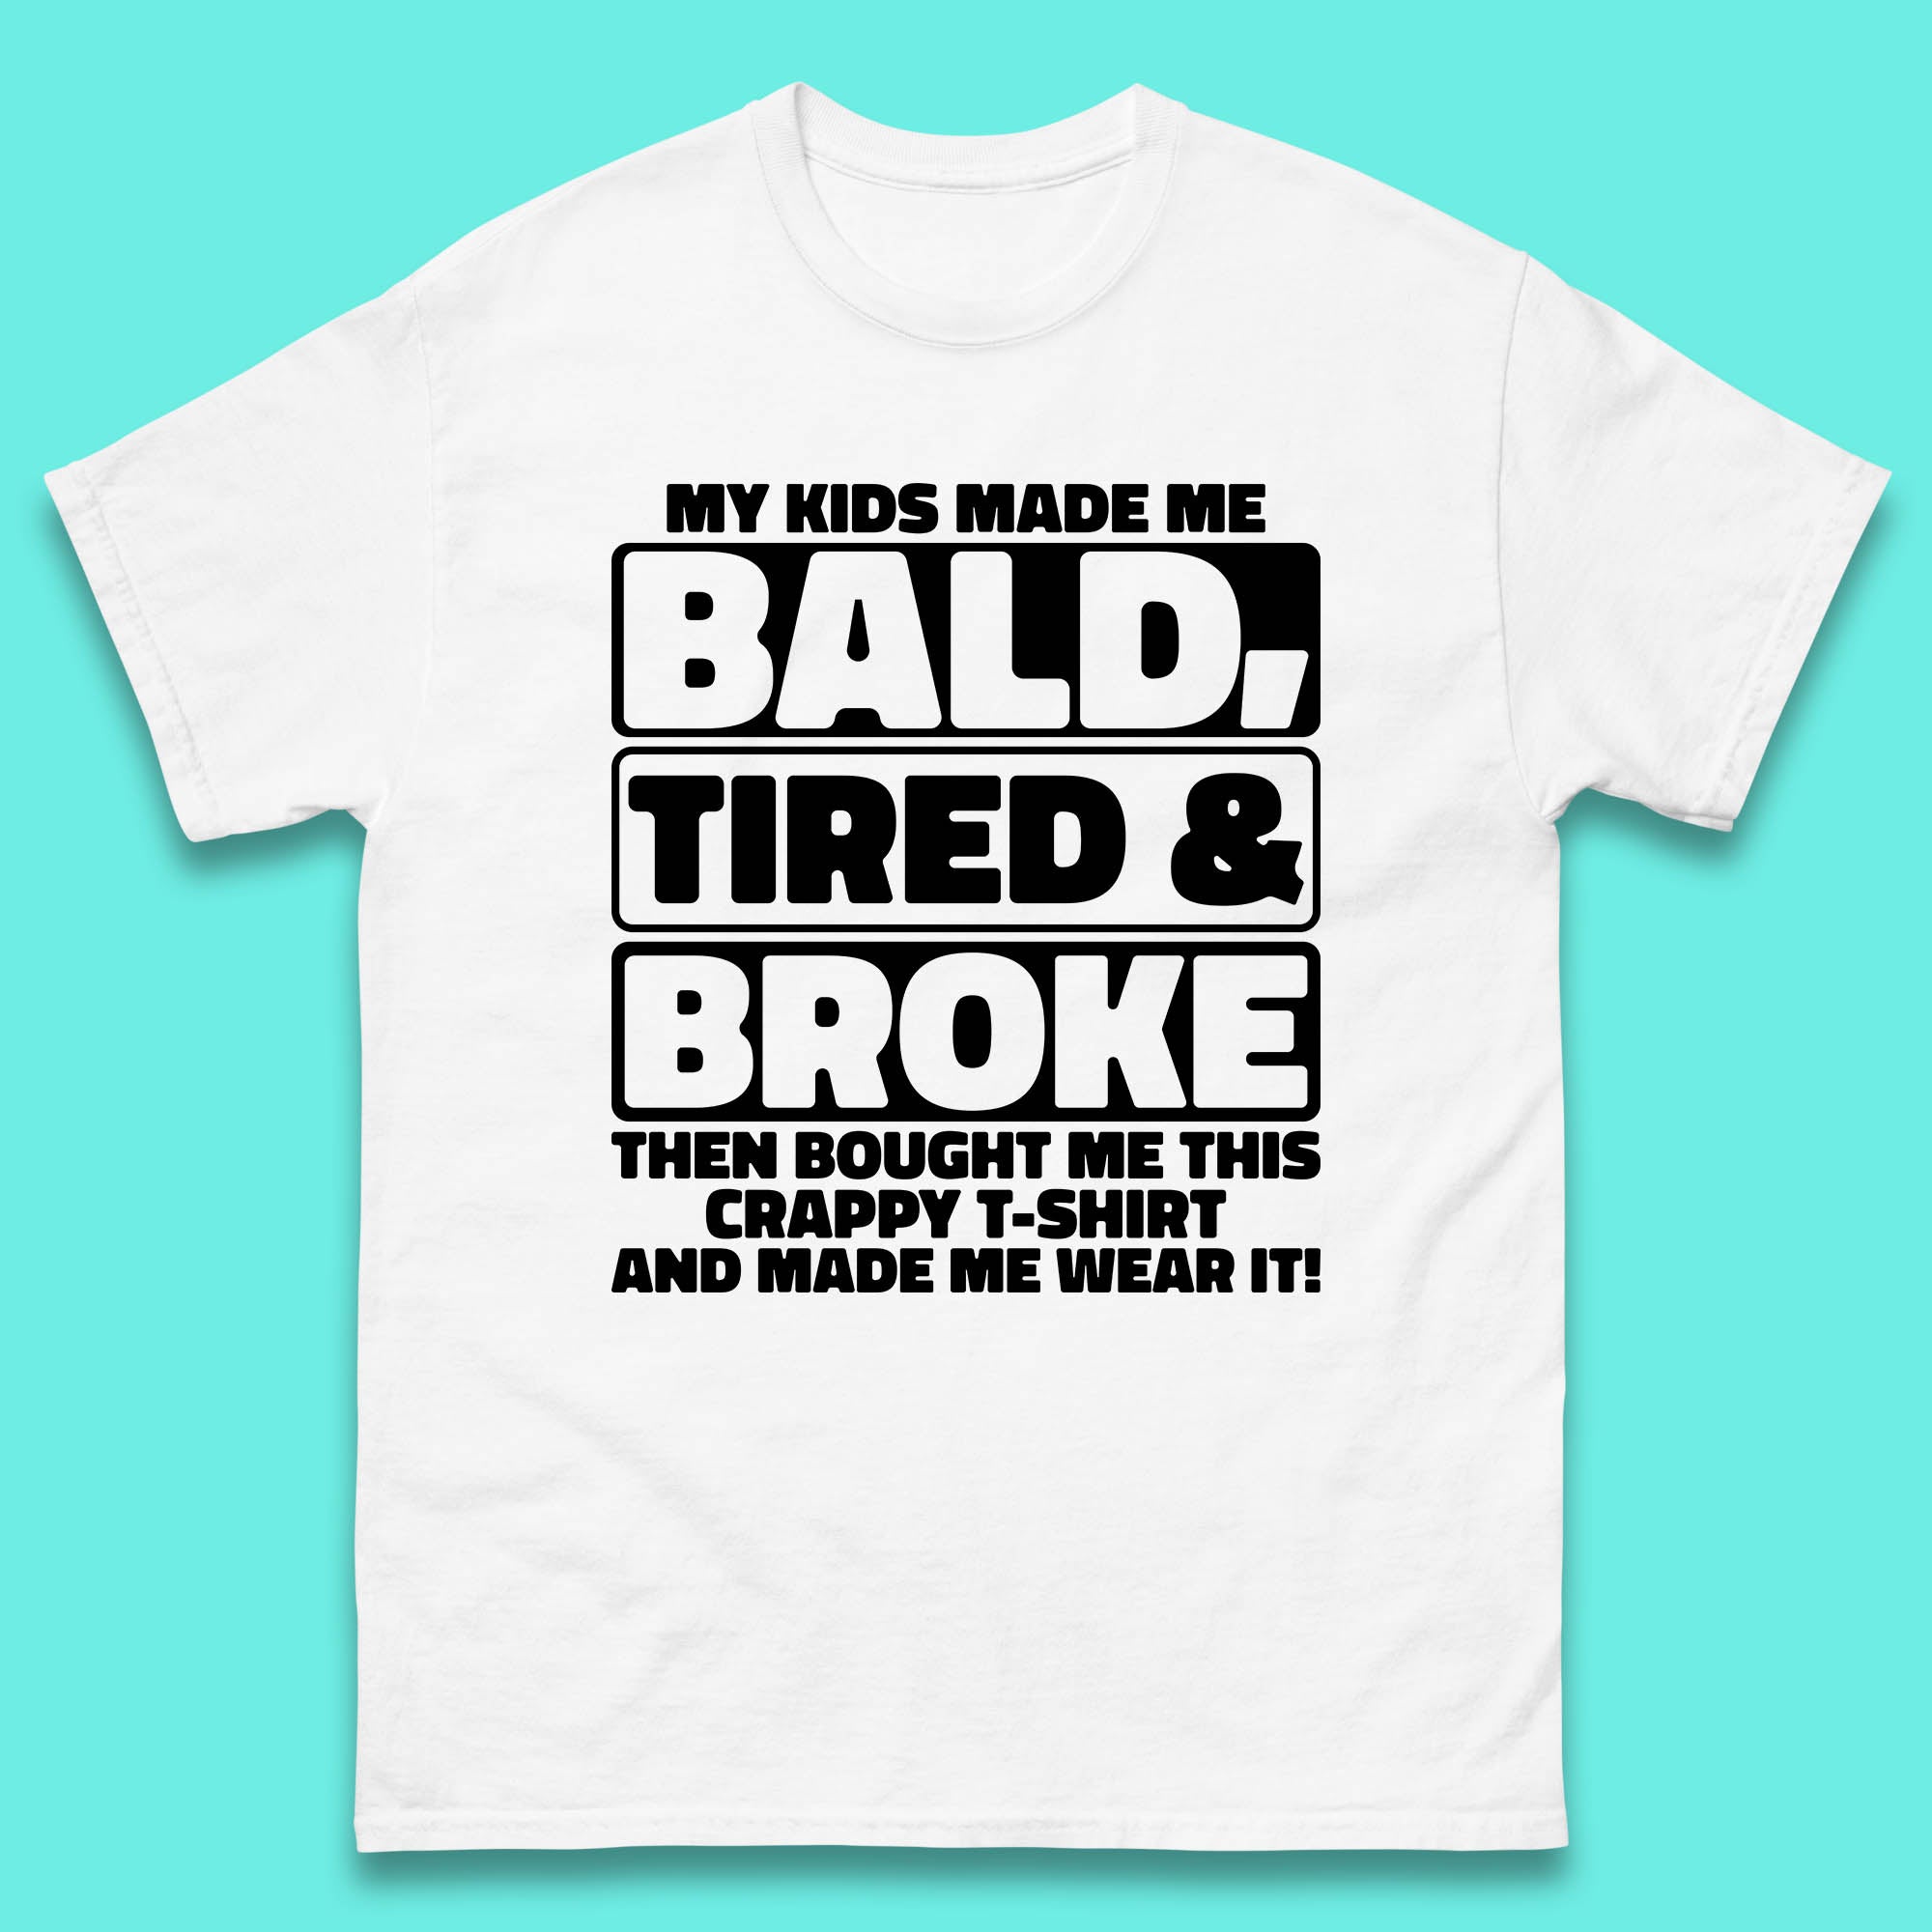 My Kids Made Me Bald Tired & Broke Funny Slogan Funny Dad Joke Spoof Mens Tee Top